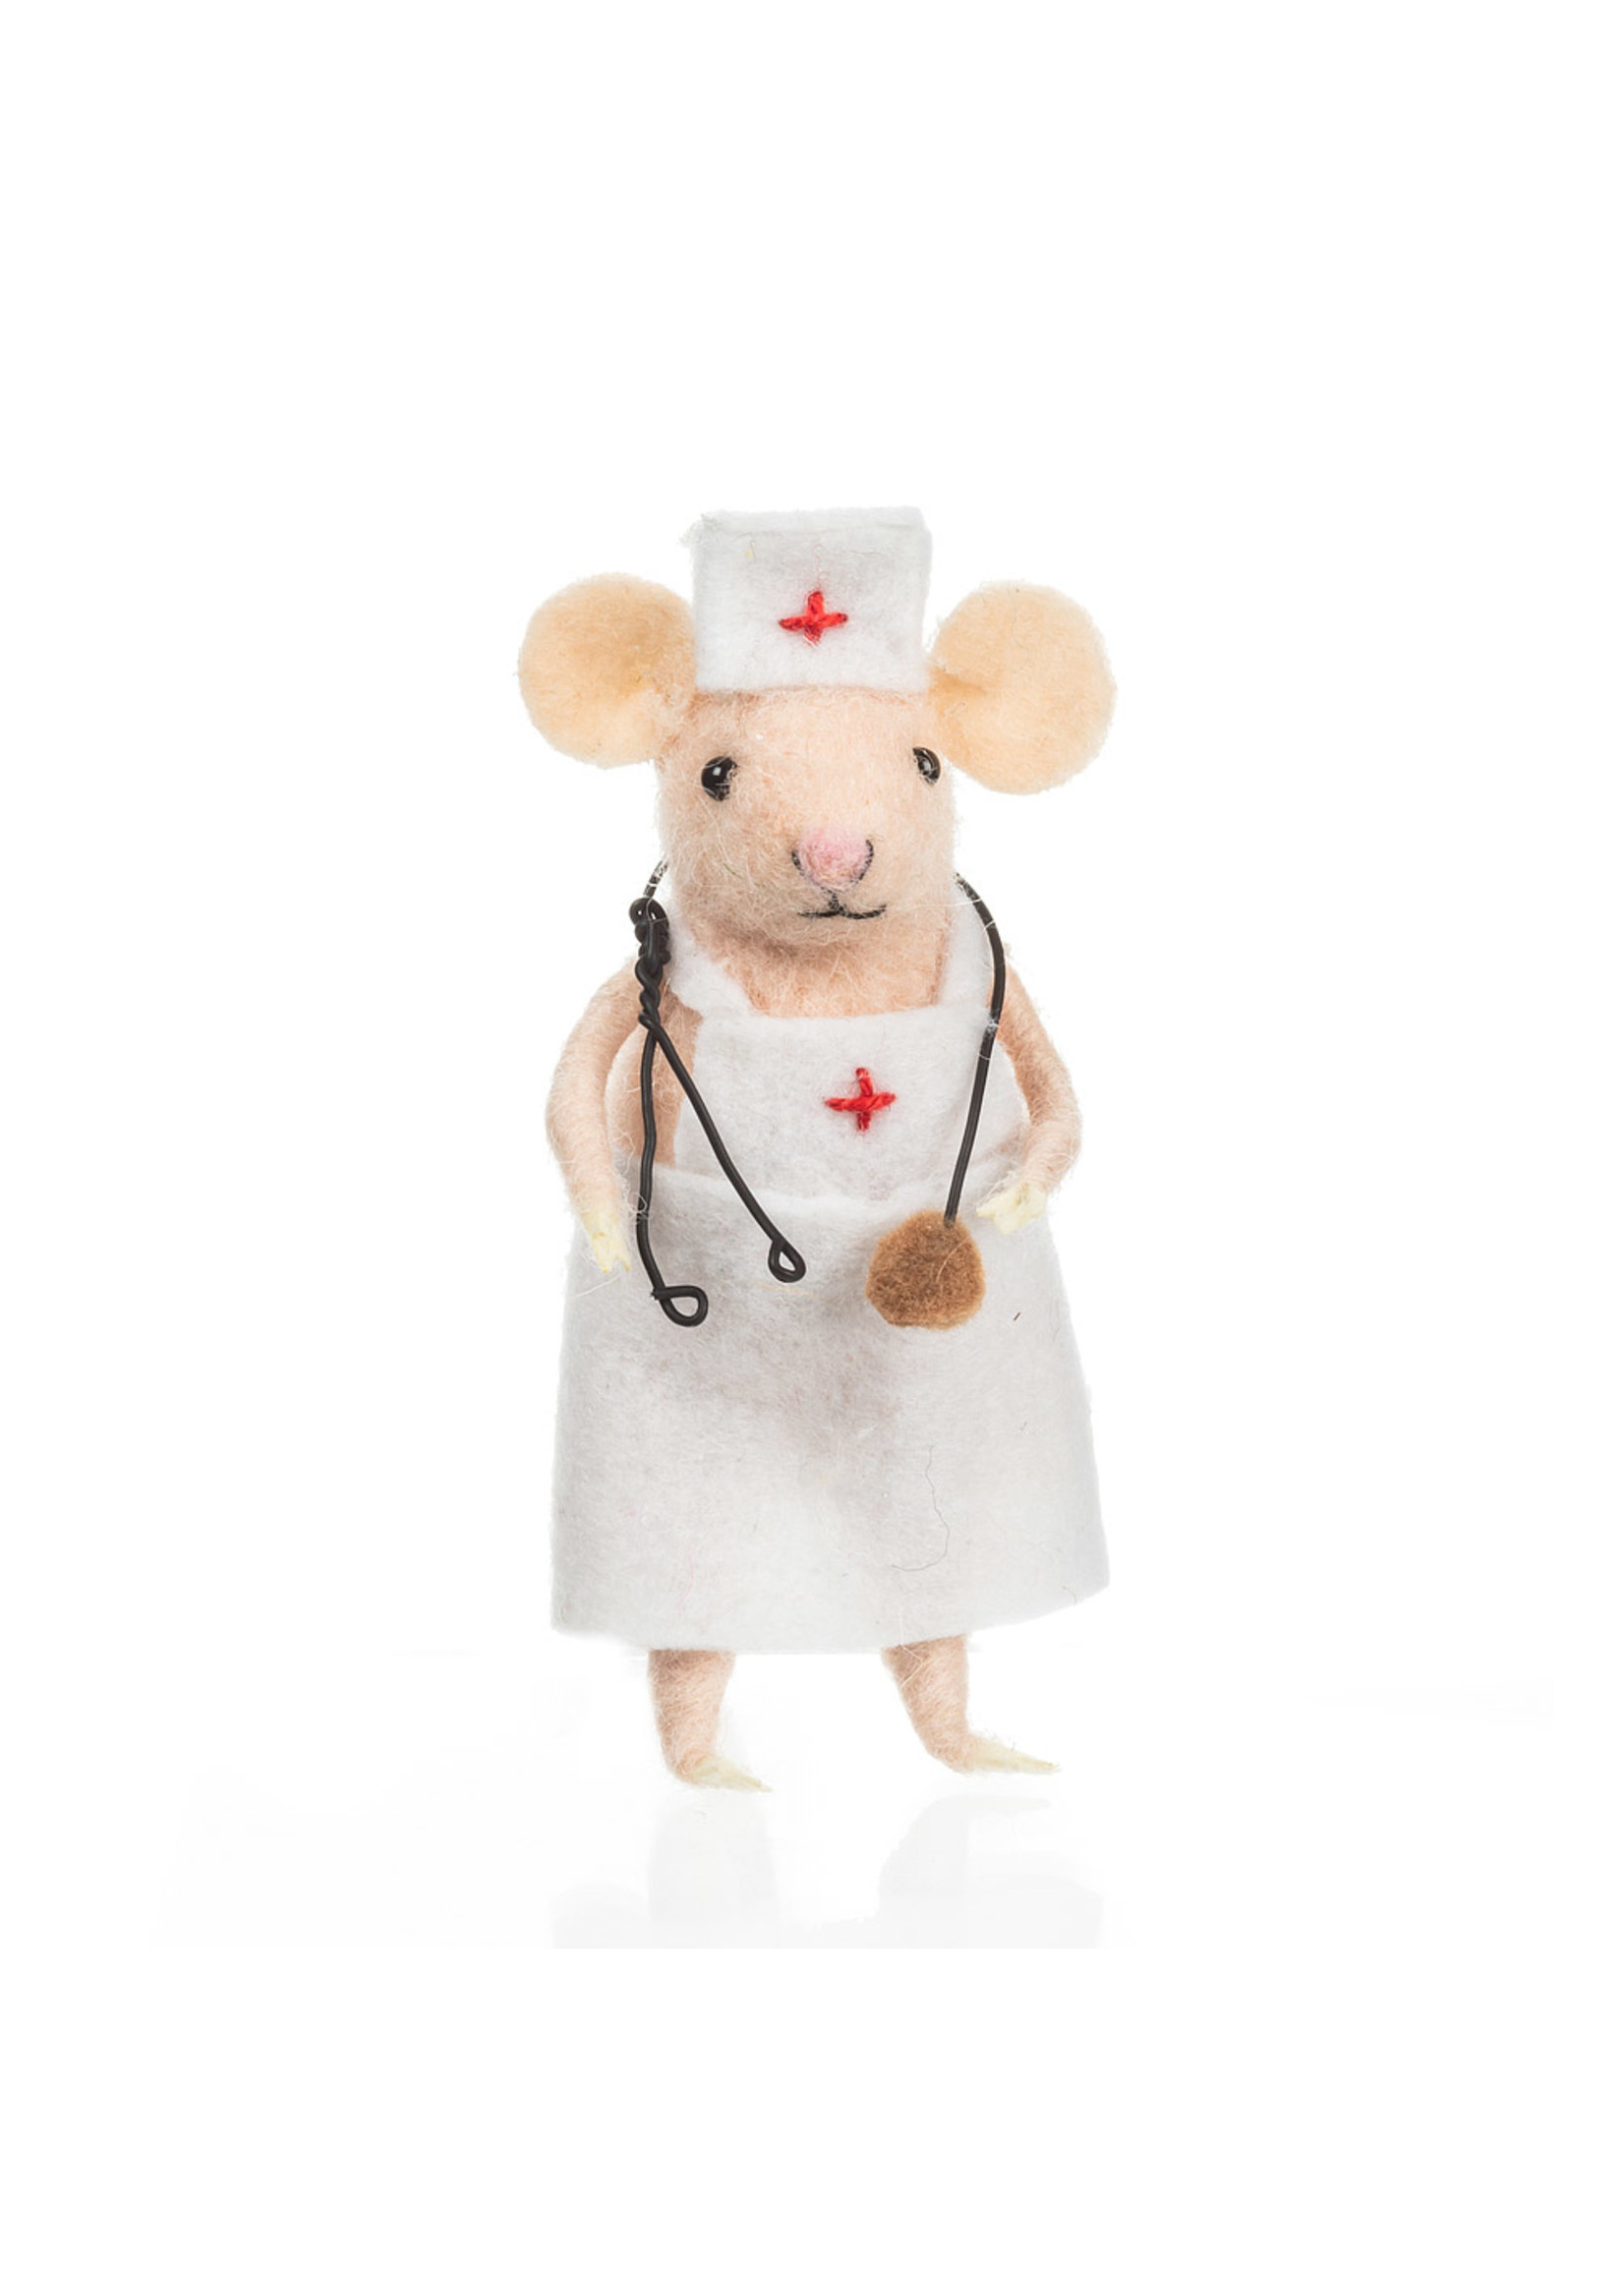 Nurse mouse in apron